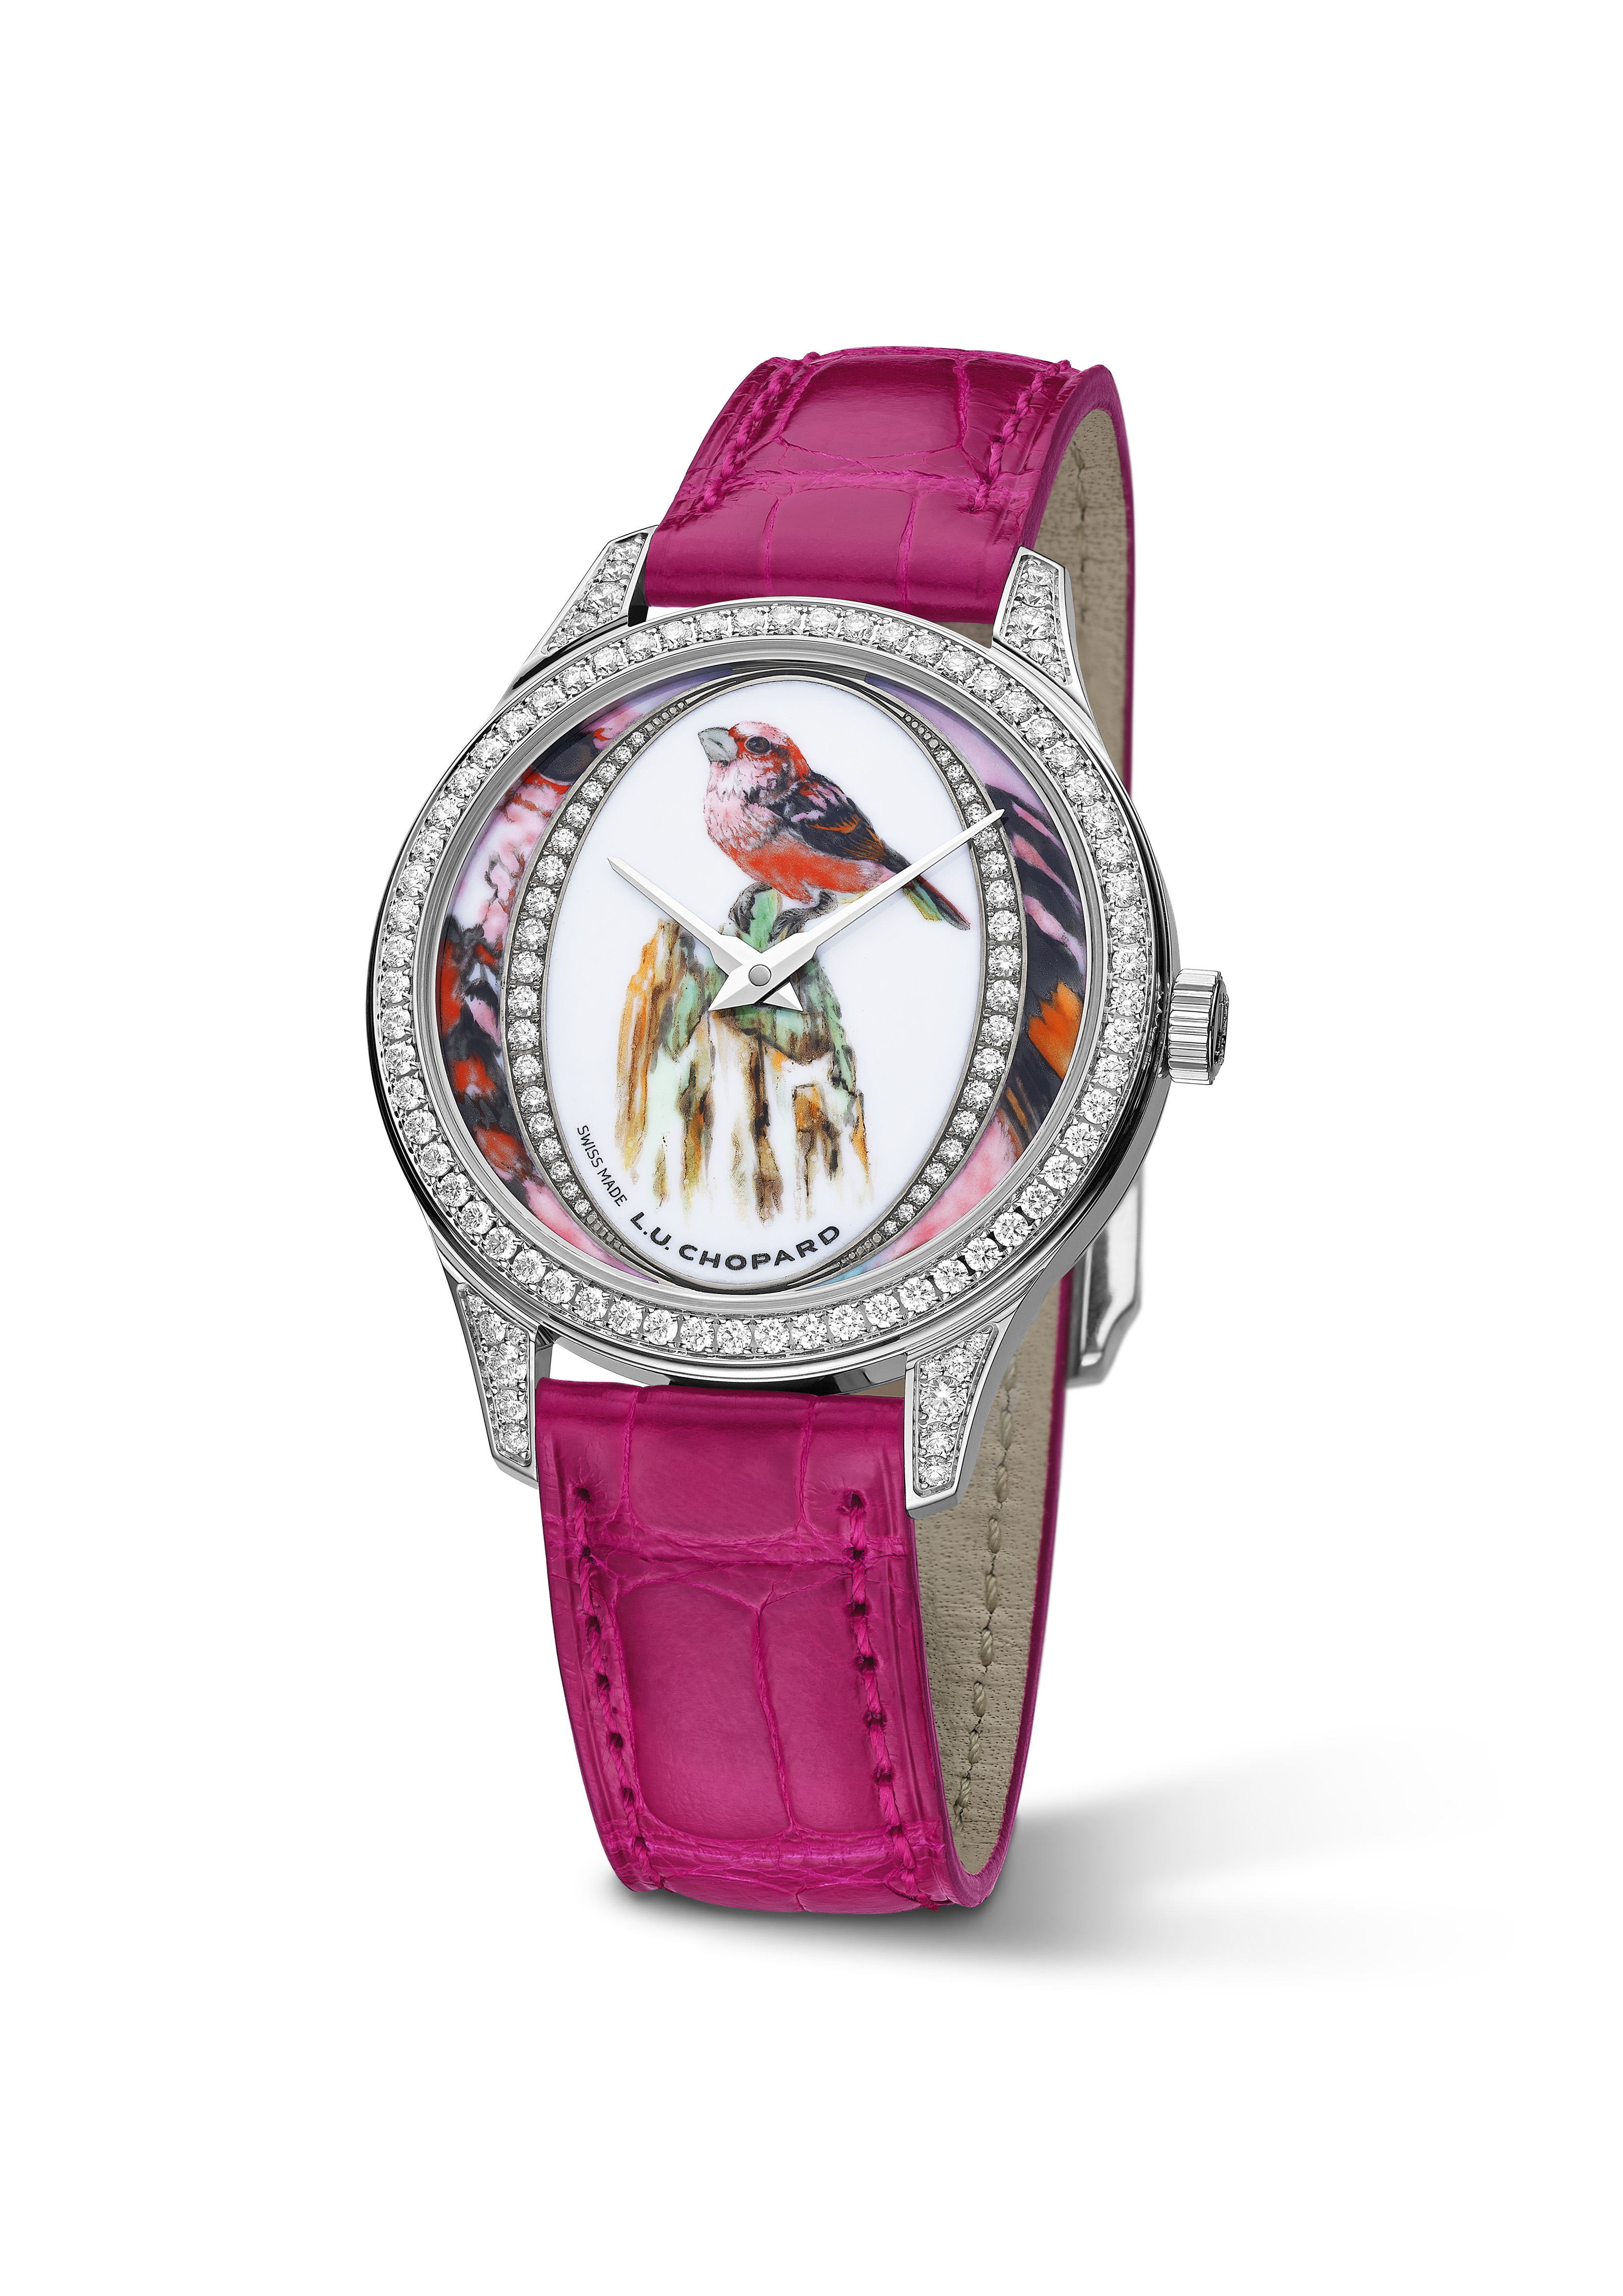 L.U.C XP BirdLife錶款是CHOPARD蕭邦為國際鳥盟成立一百週年所推出的精湛腕錶